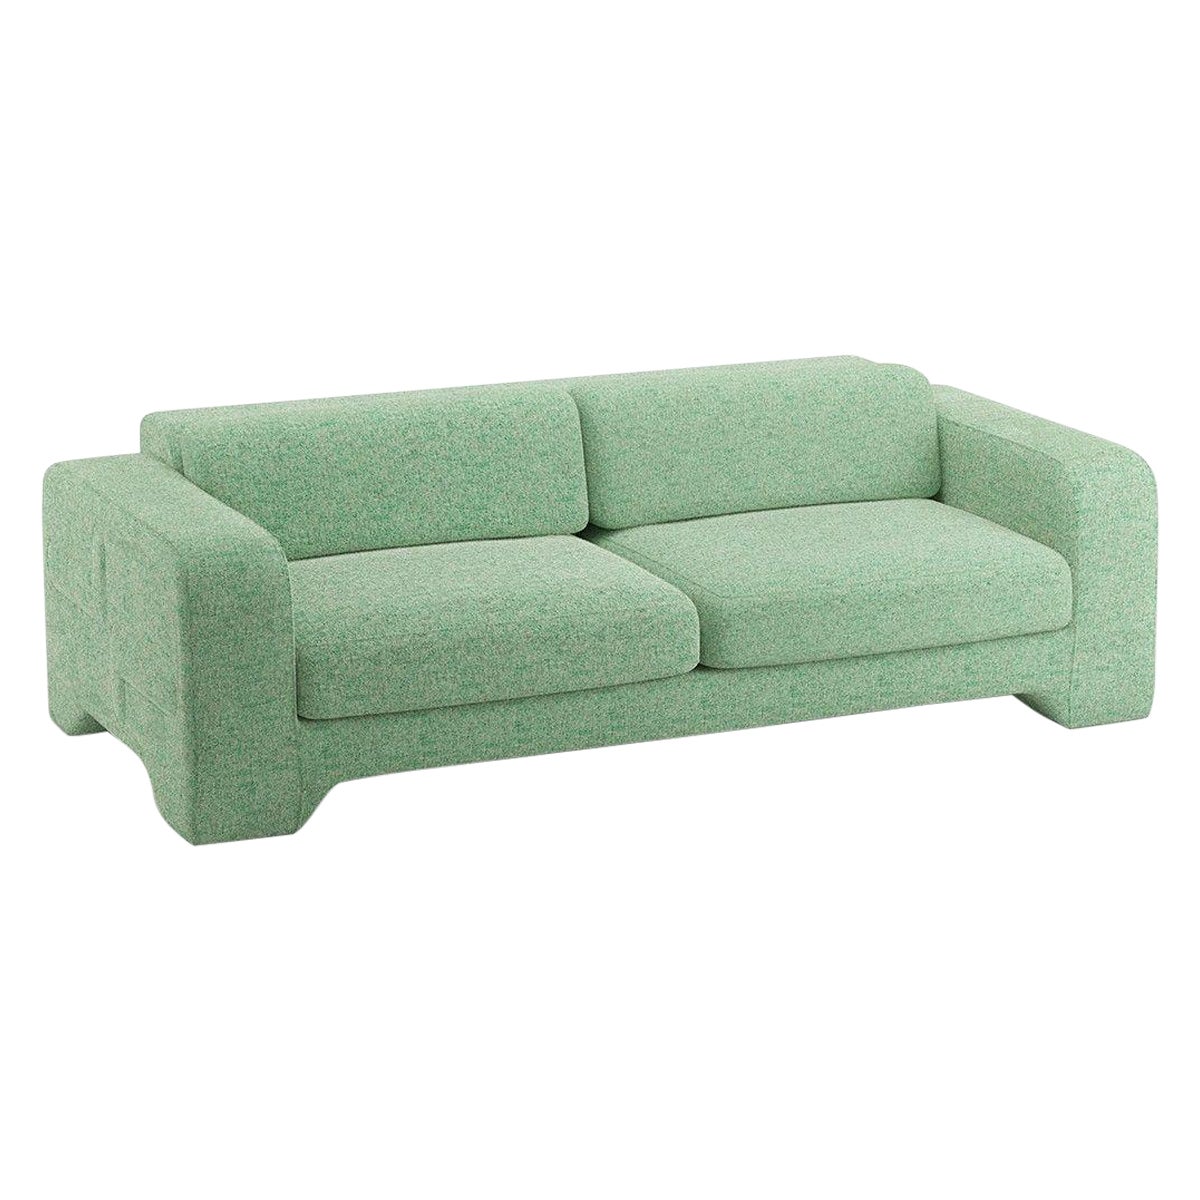 Popus Editions Giovanna 3 Seater Sofa in Emerald London Linen Fabric